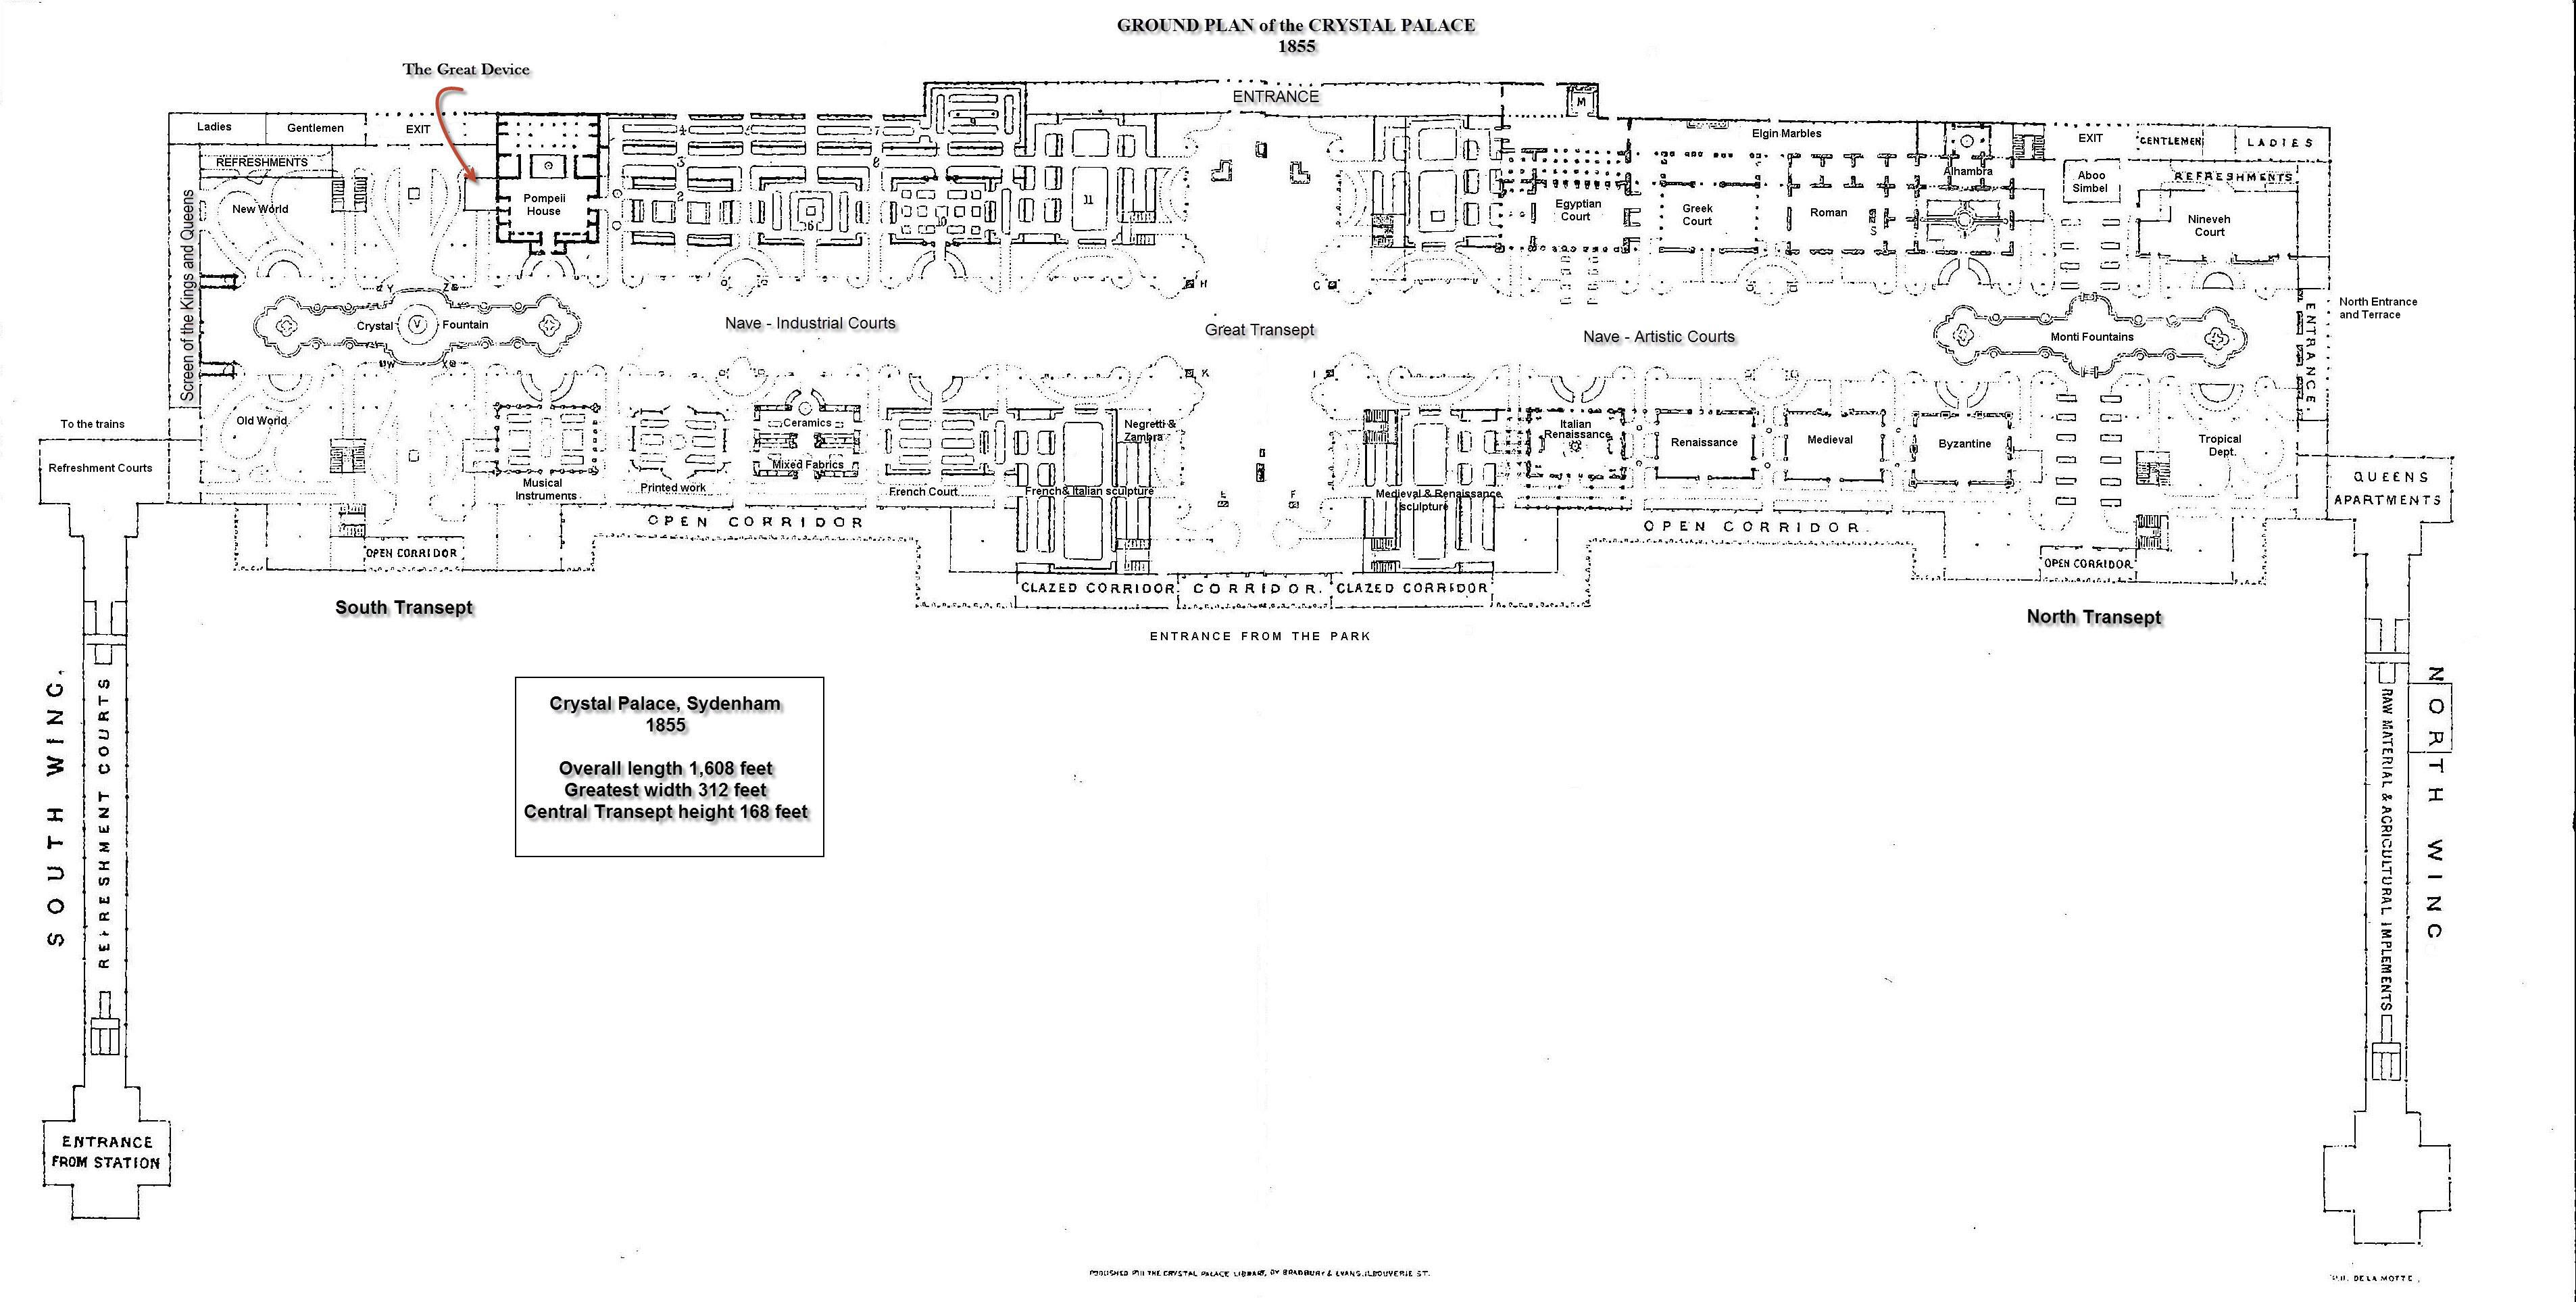 The Crystal Palace ground floor plan 185455Ground floor